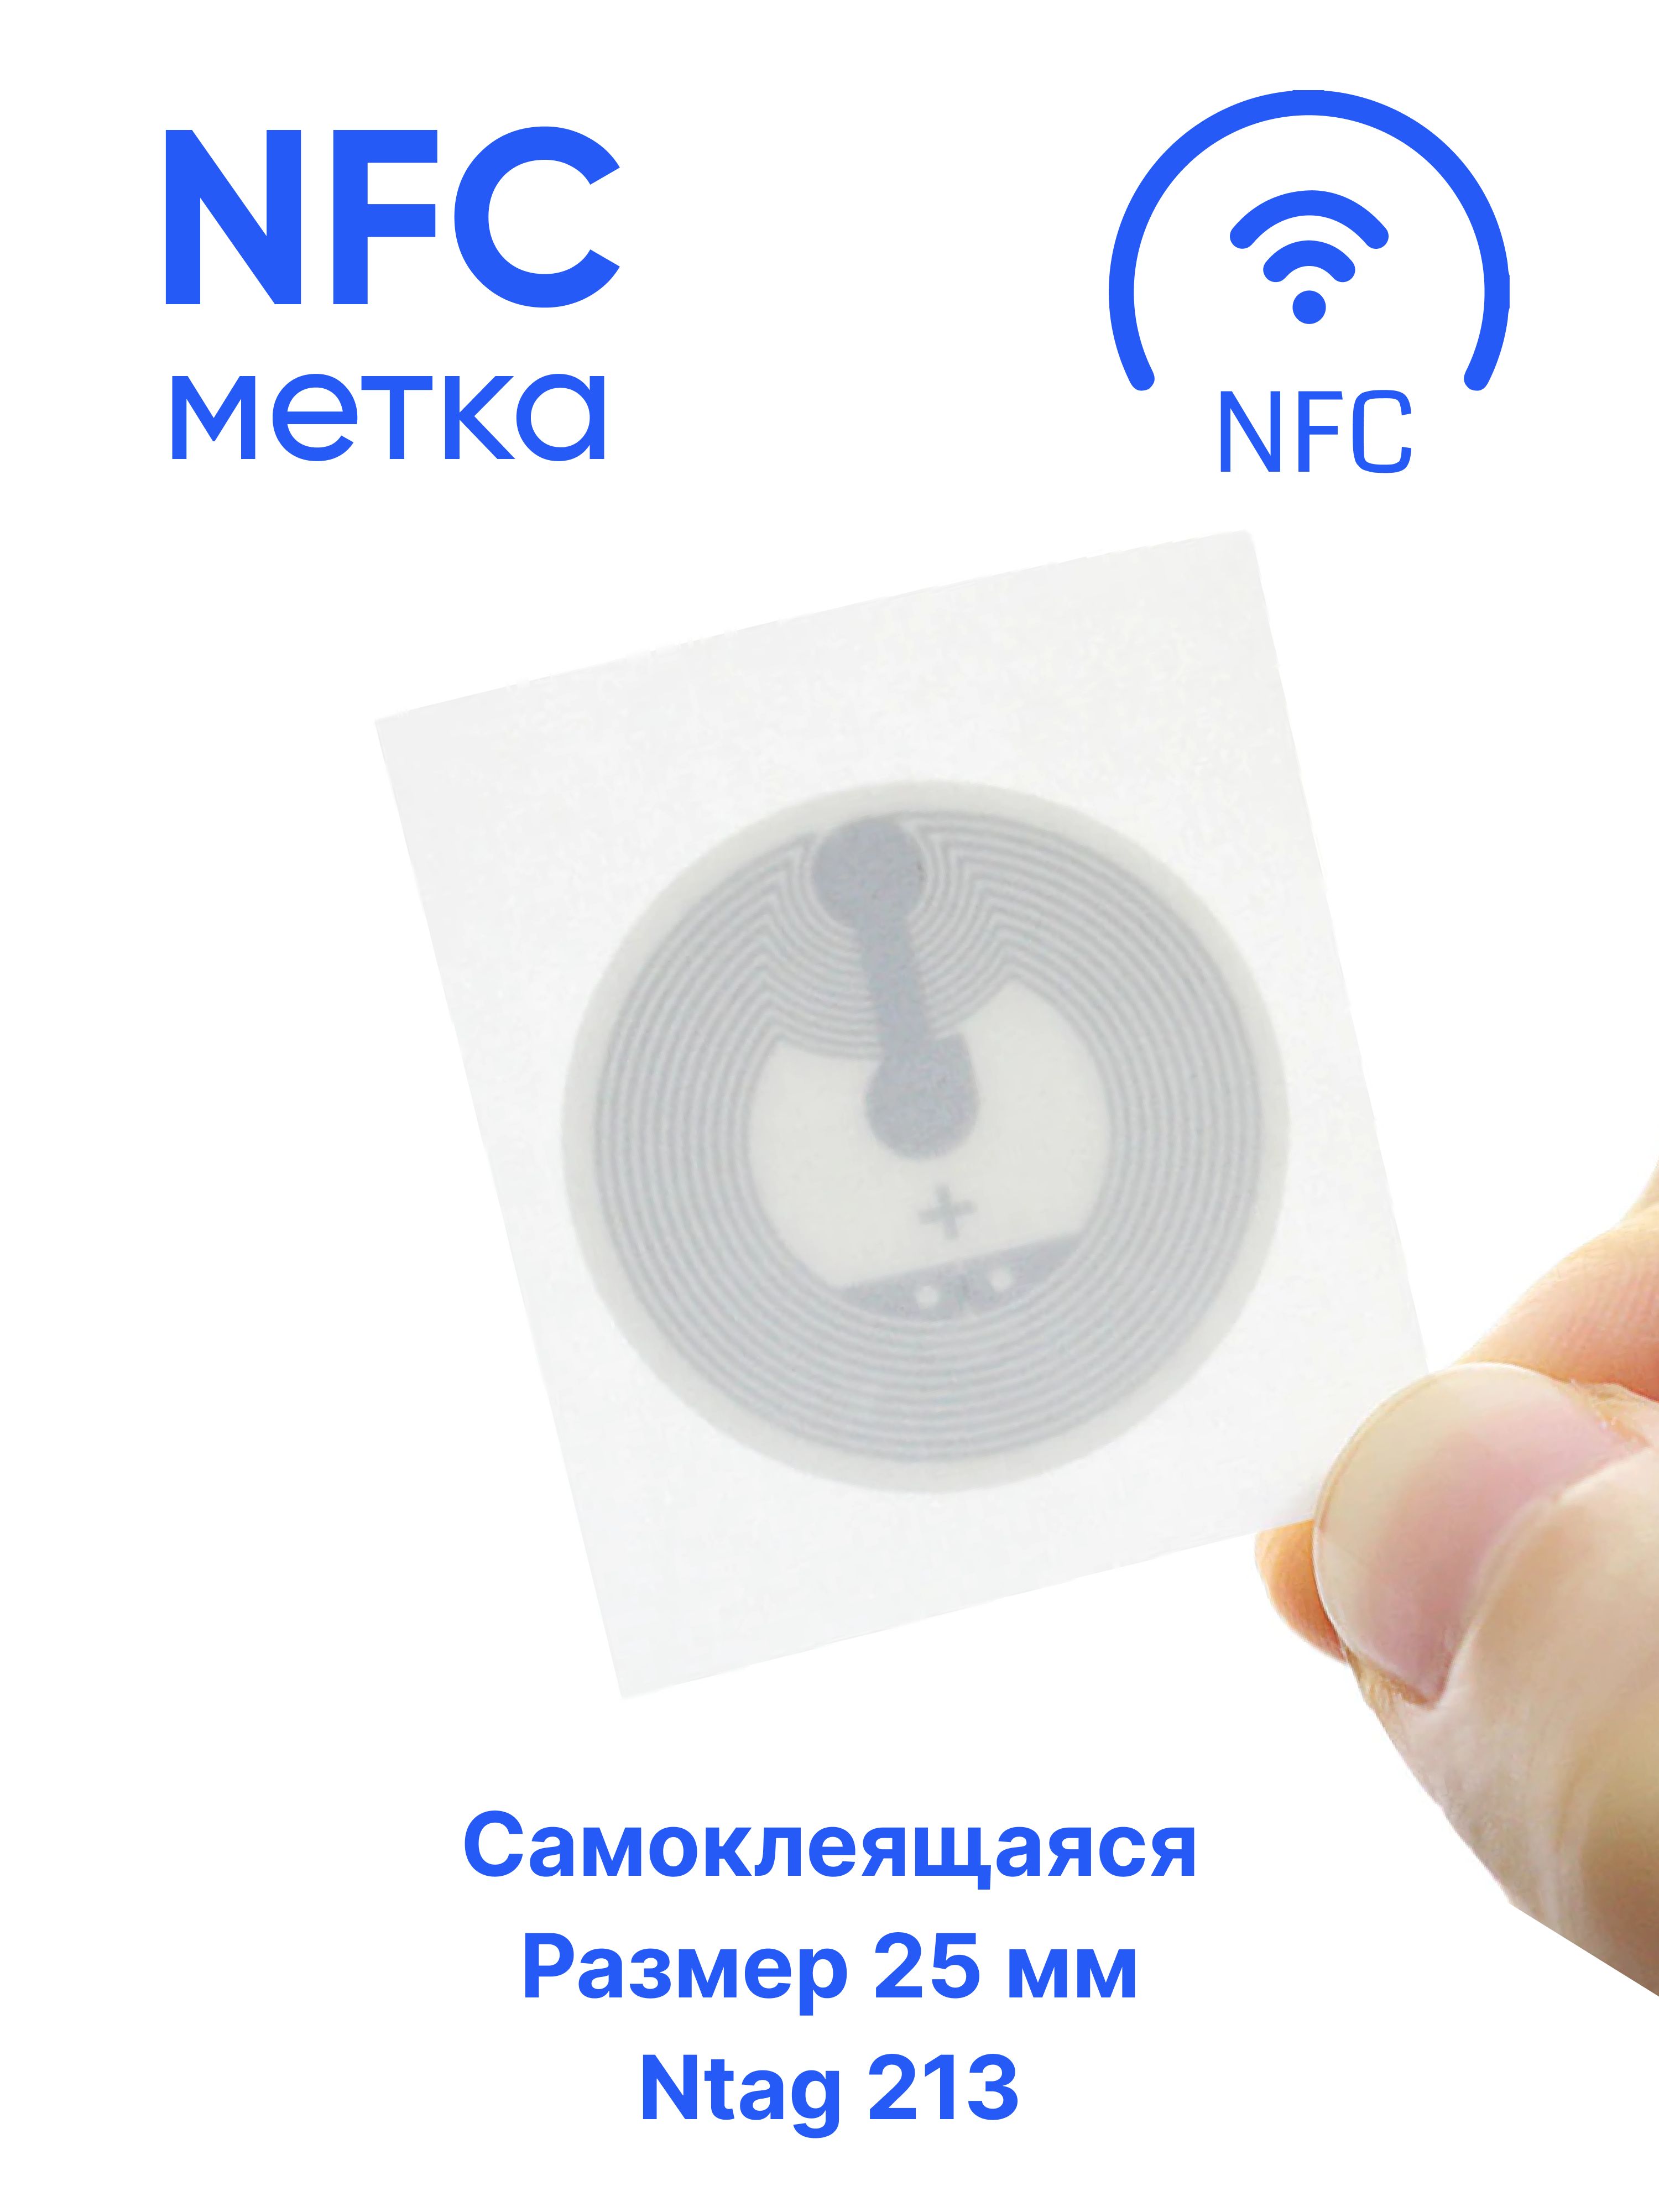 Метка для оплаты. NFC метка. NFC метка для бесконтактной оплаты. NFC метка (1 штук). NFC метка на карте.